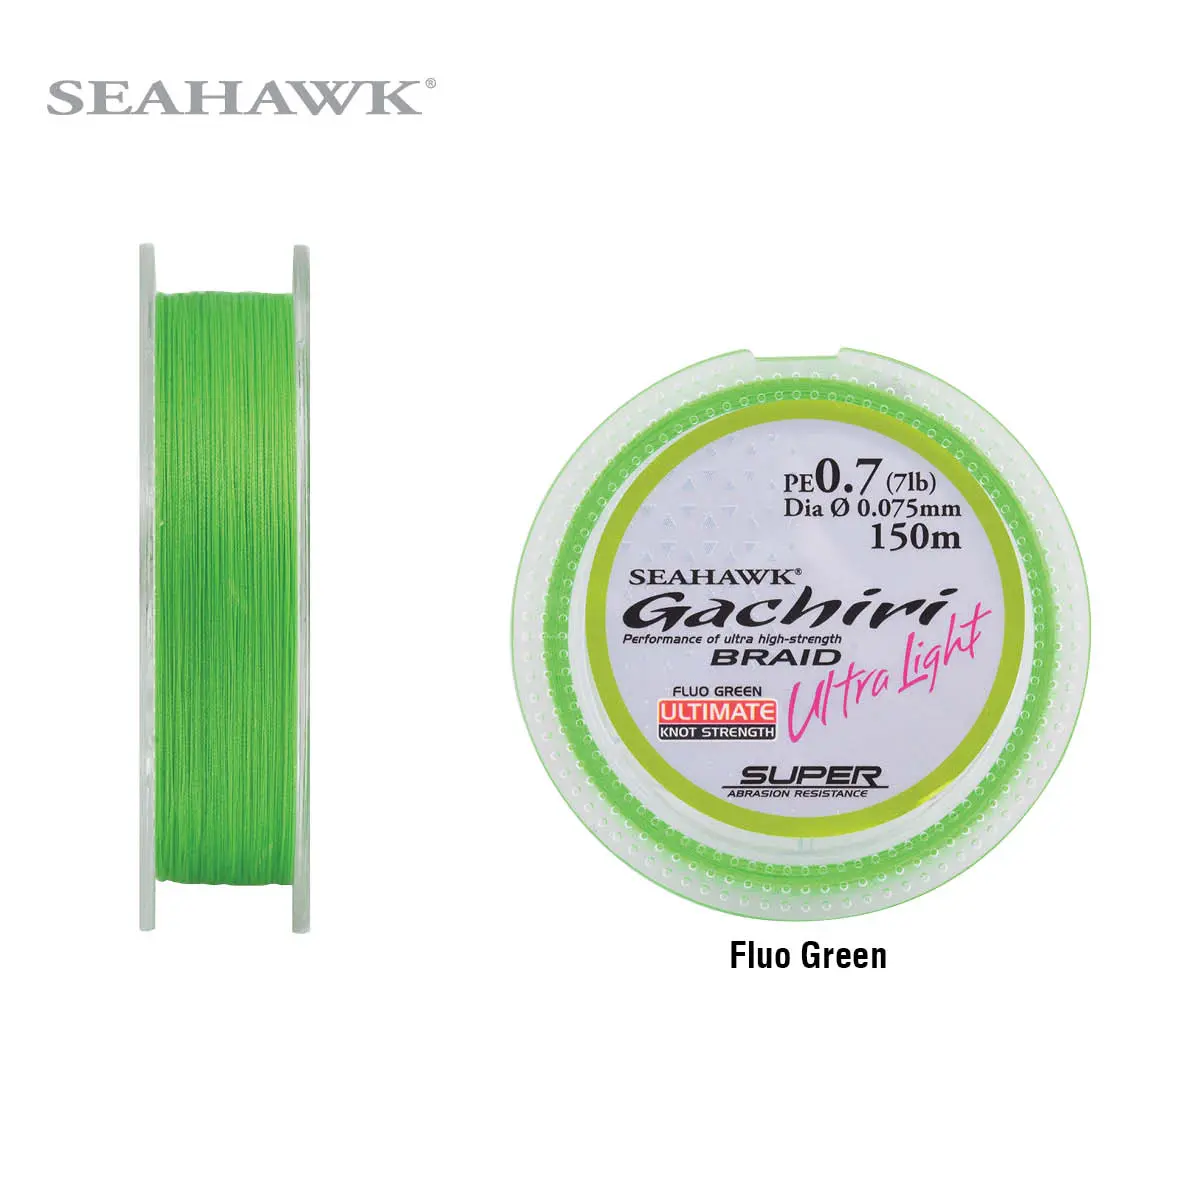 https://seahawkfishing.com/wp-content/uploads/2020/07/Seahawk-Gachiri-UL-GACUL-Fluo-Green.jpg.webp